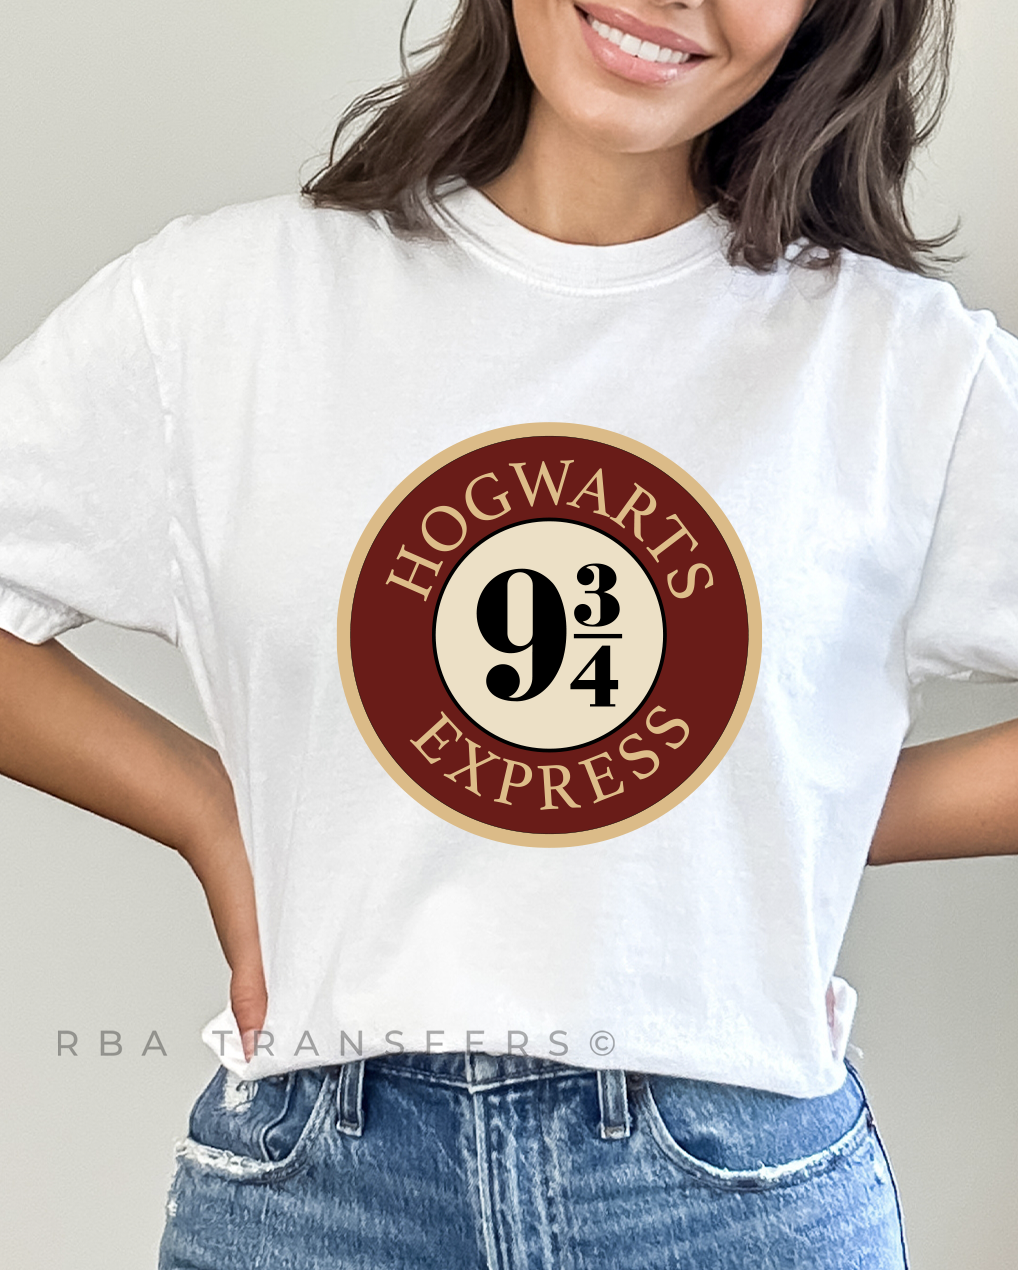 Hogwarts Express 9 3/4 Full Colour Transfer